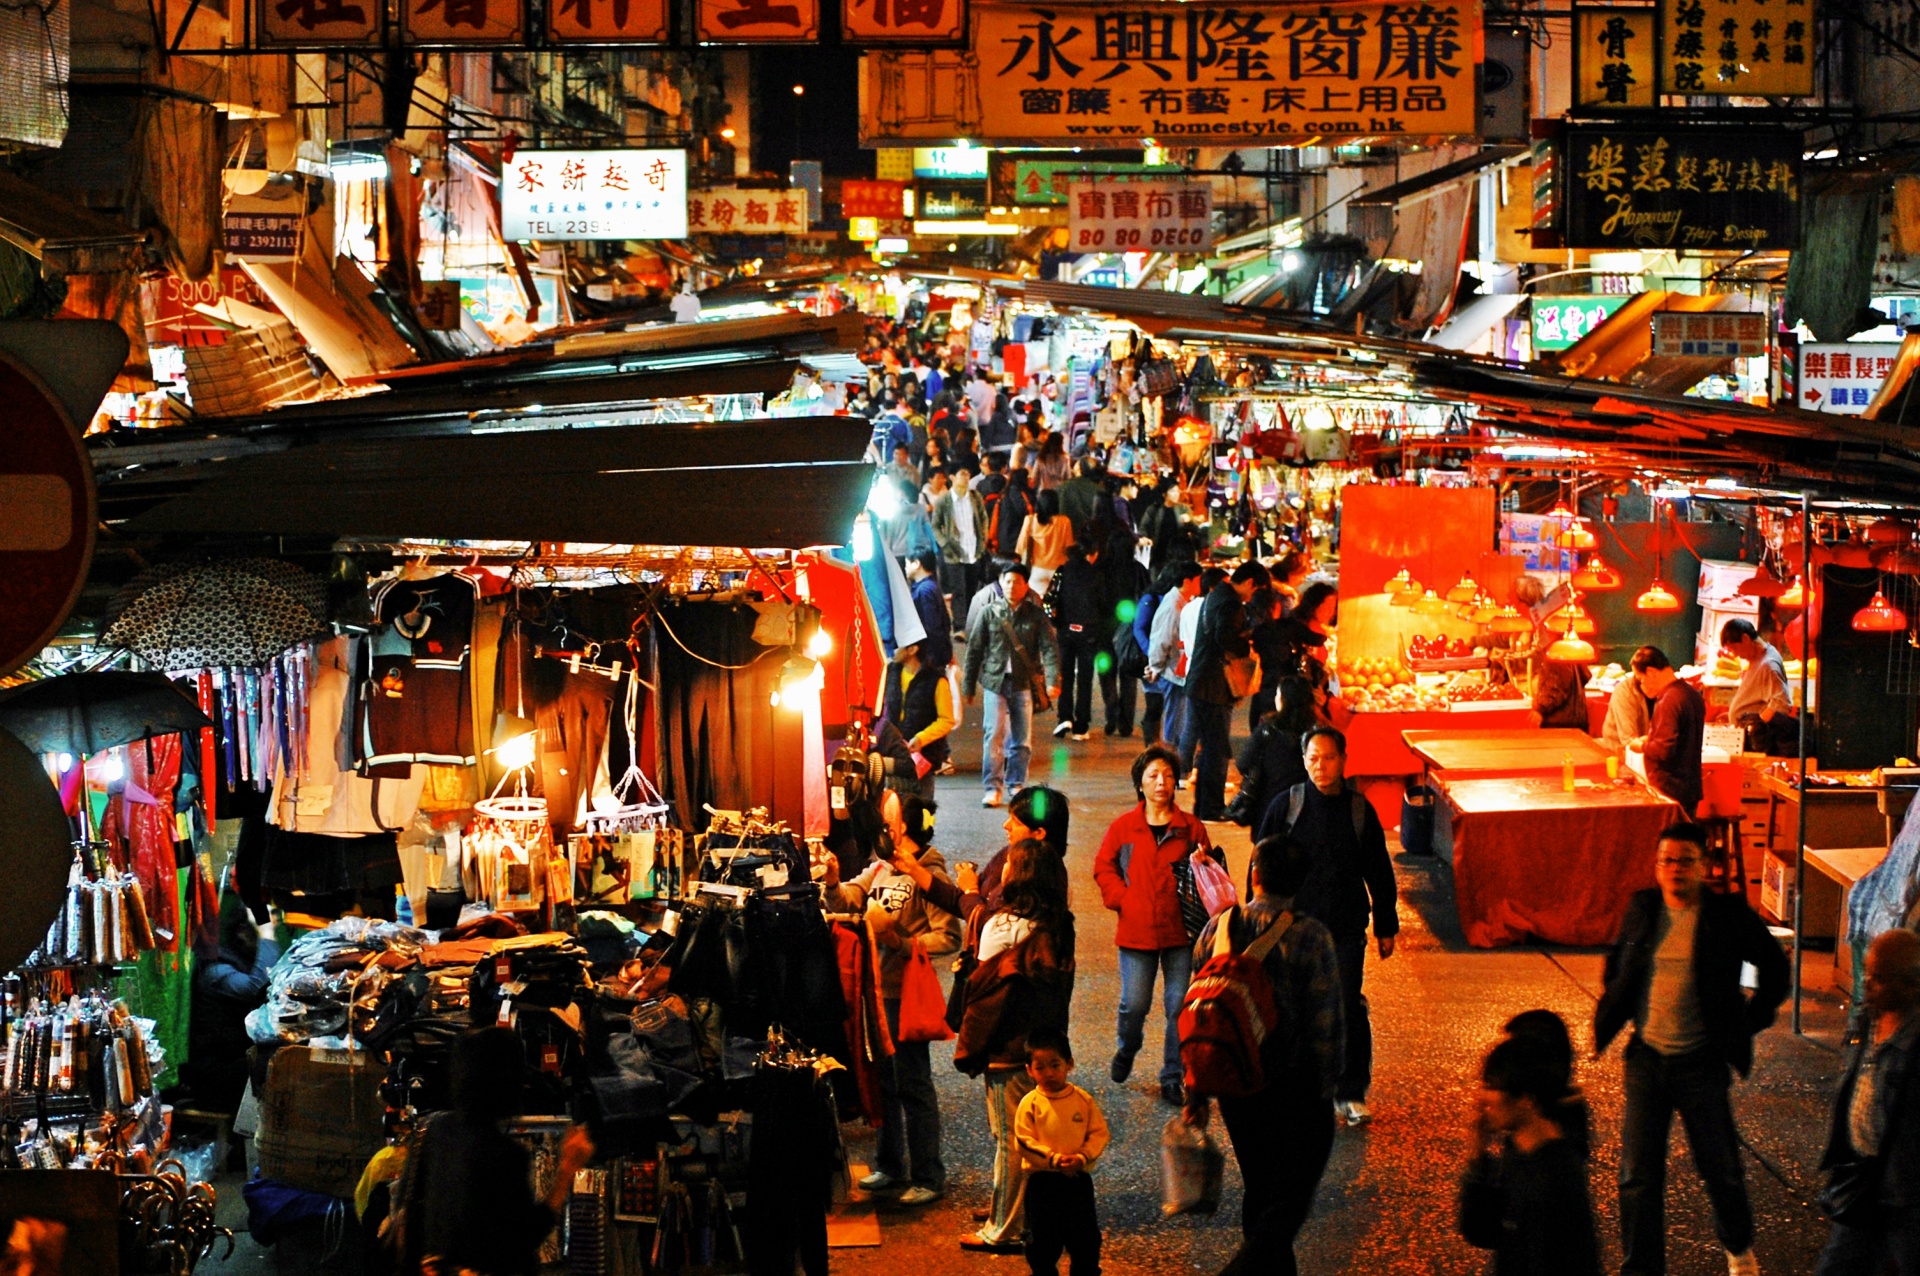 The famous Hong Kong night market